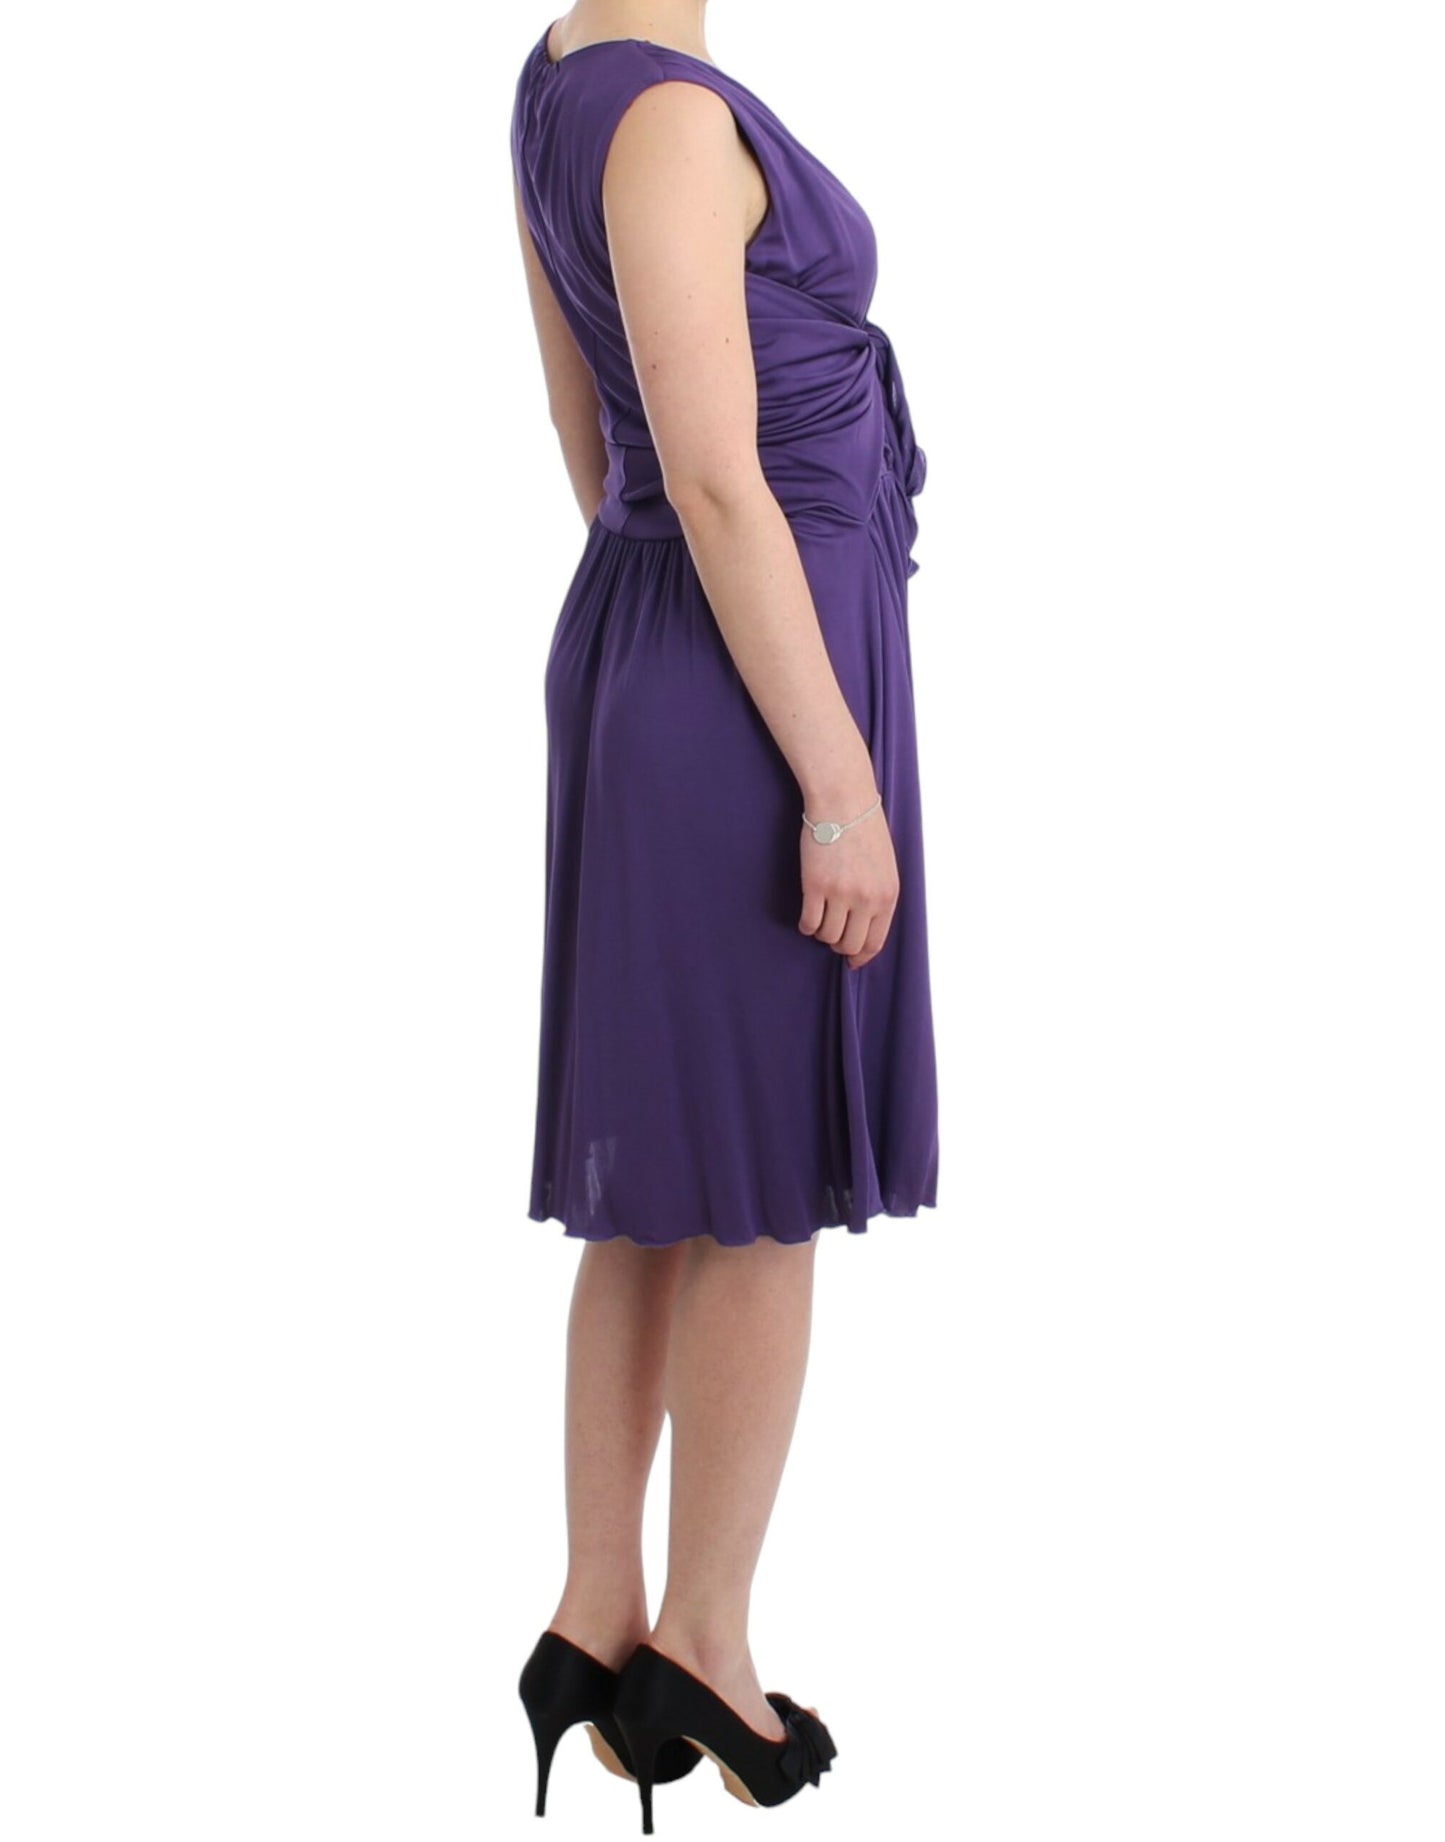 Elegant Purple Knee-Length Jersey Dress